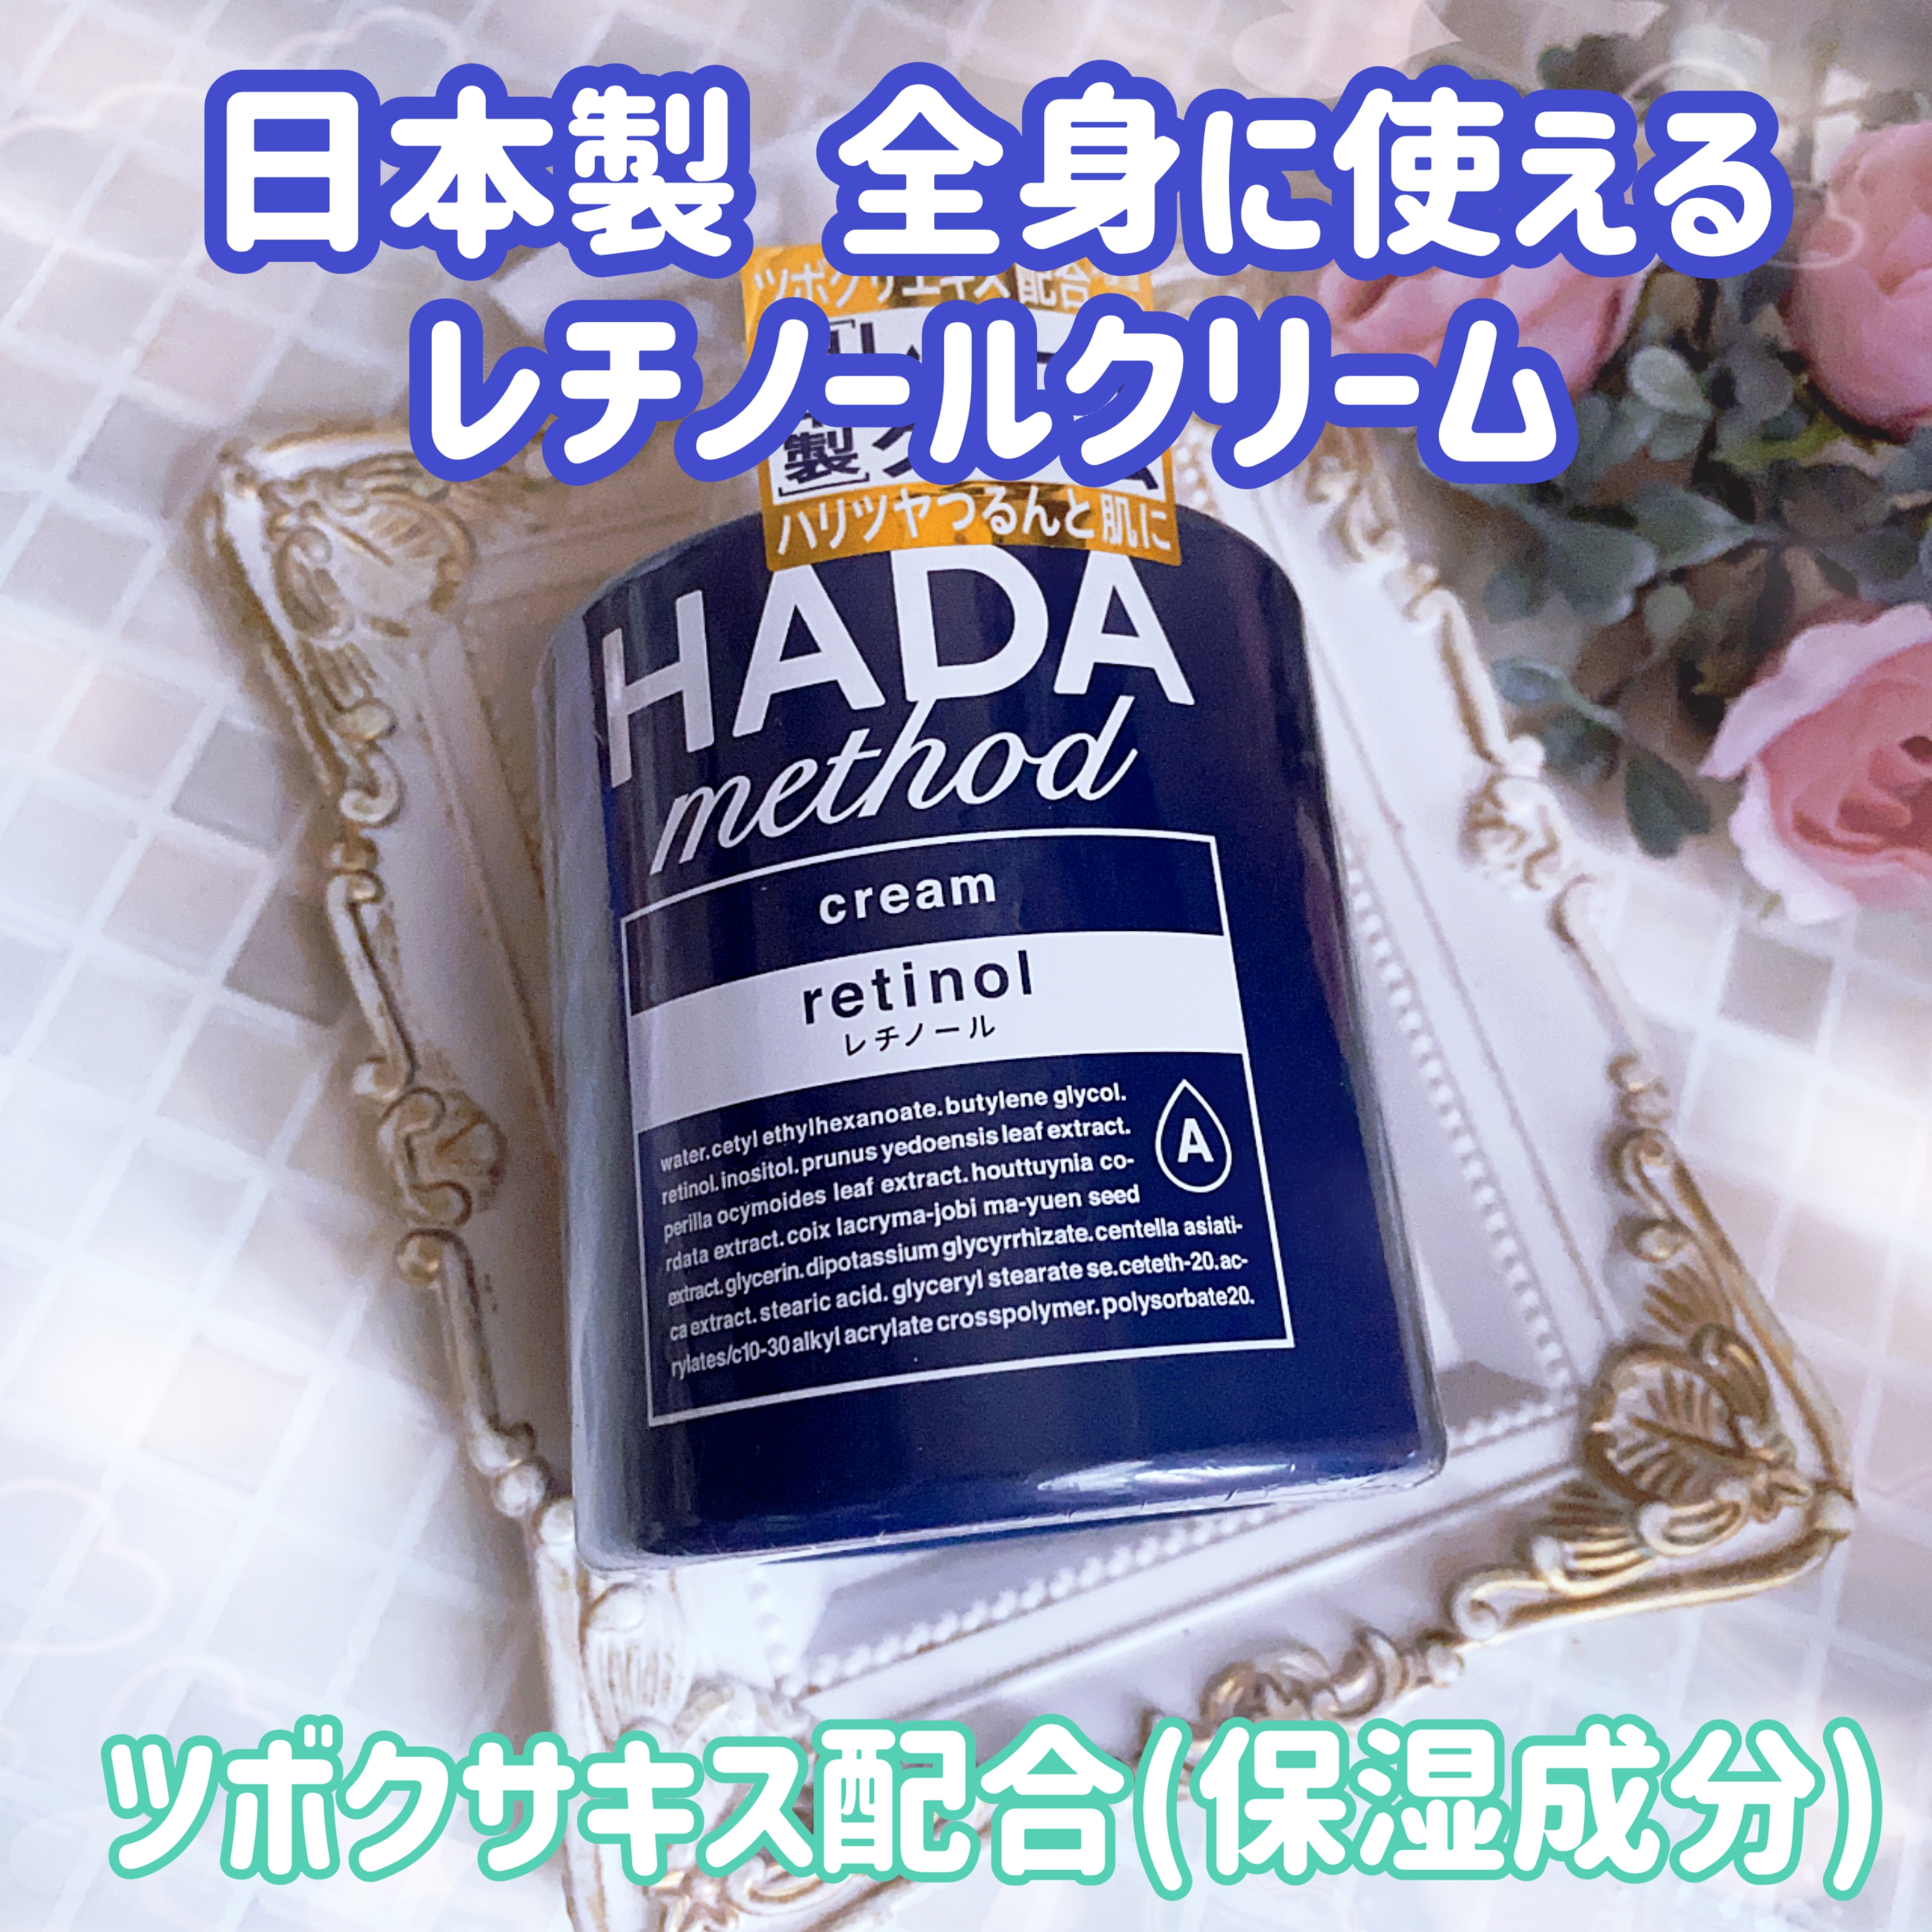 HADA method(ハダメソッド) レチノペアクリームの良い点・メリットに関する珈琲豆♡さんの口コミ画像1